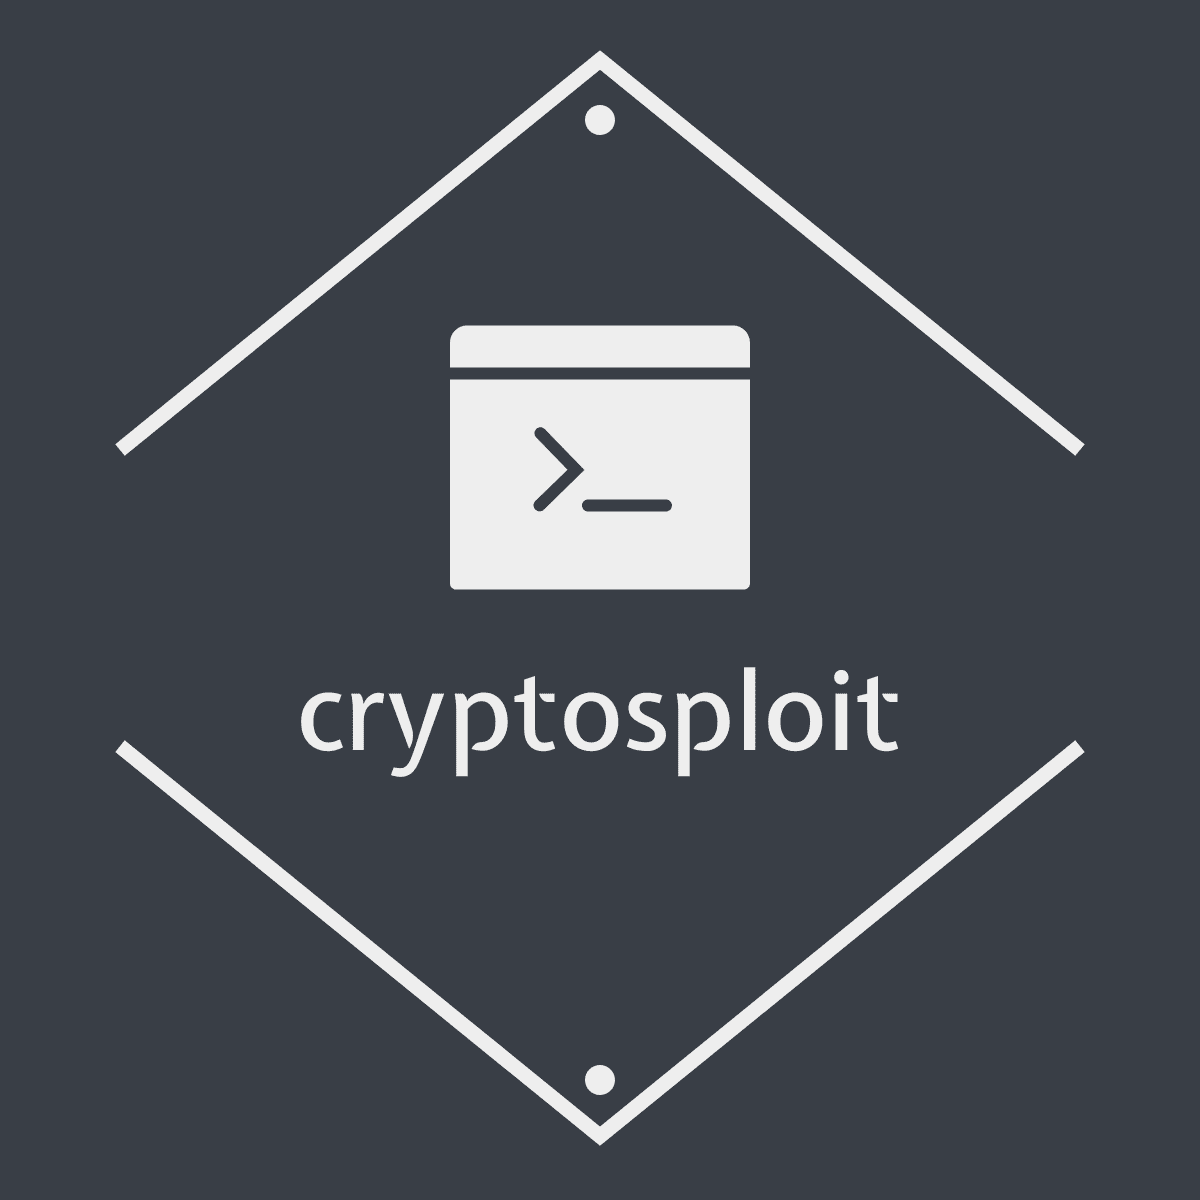 cryptosploit_logo.png